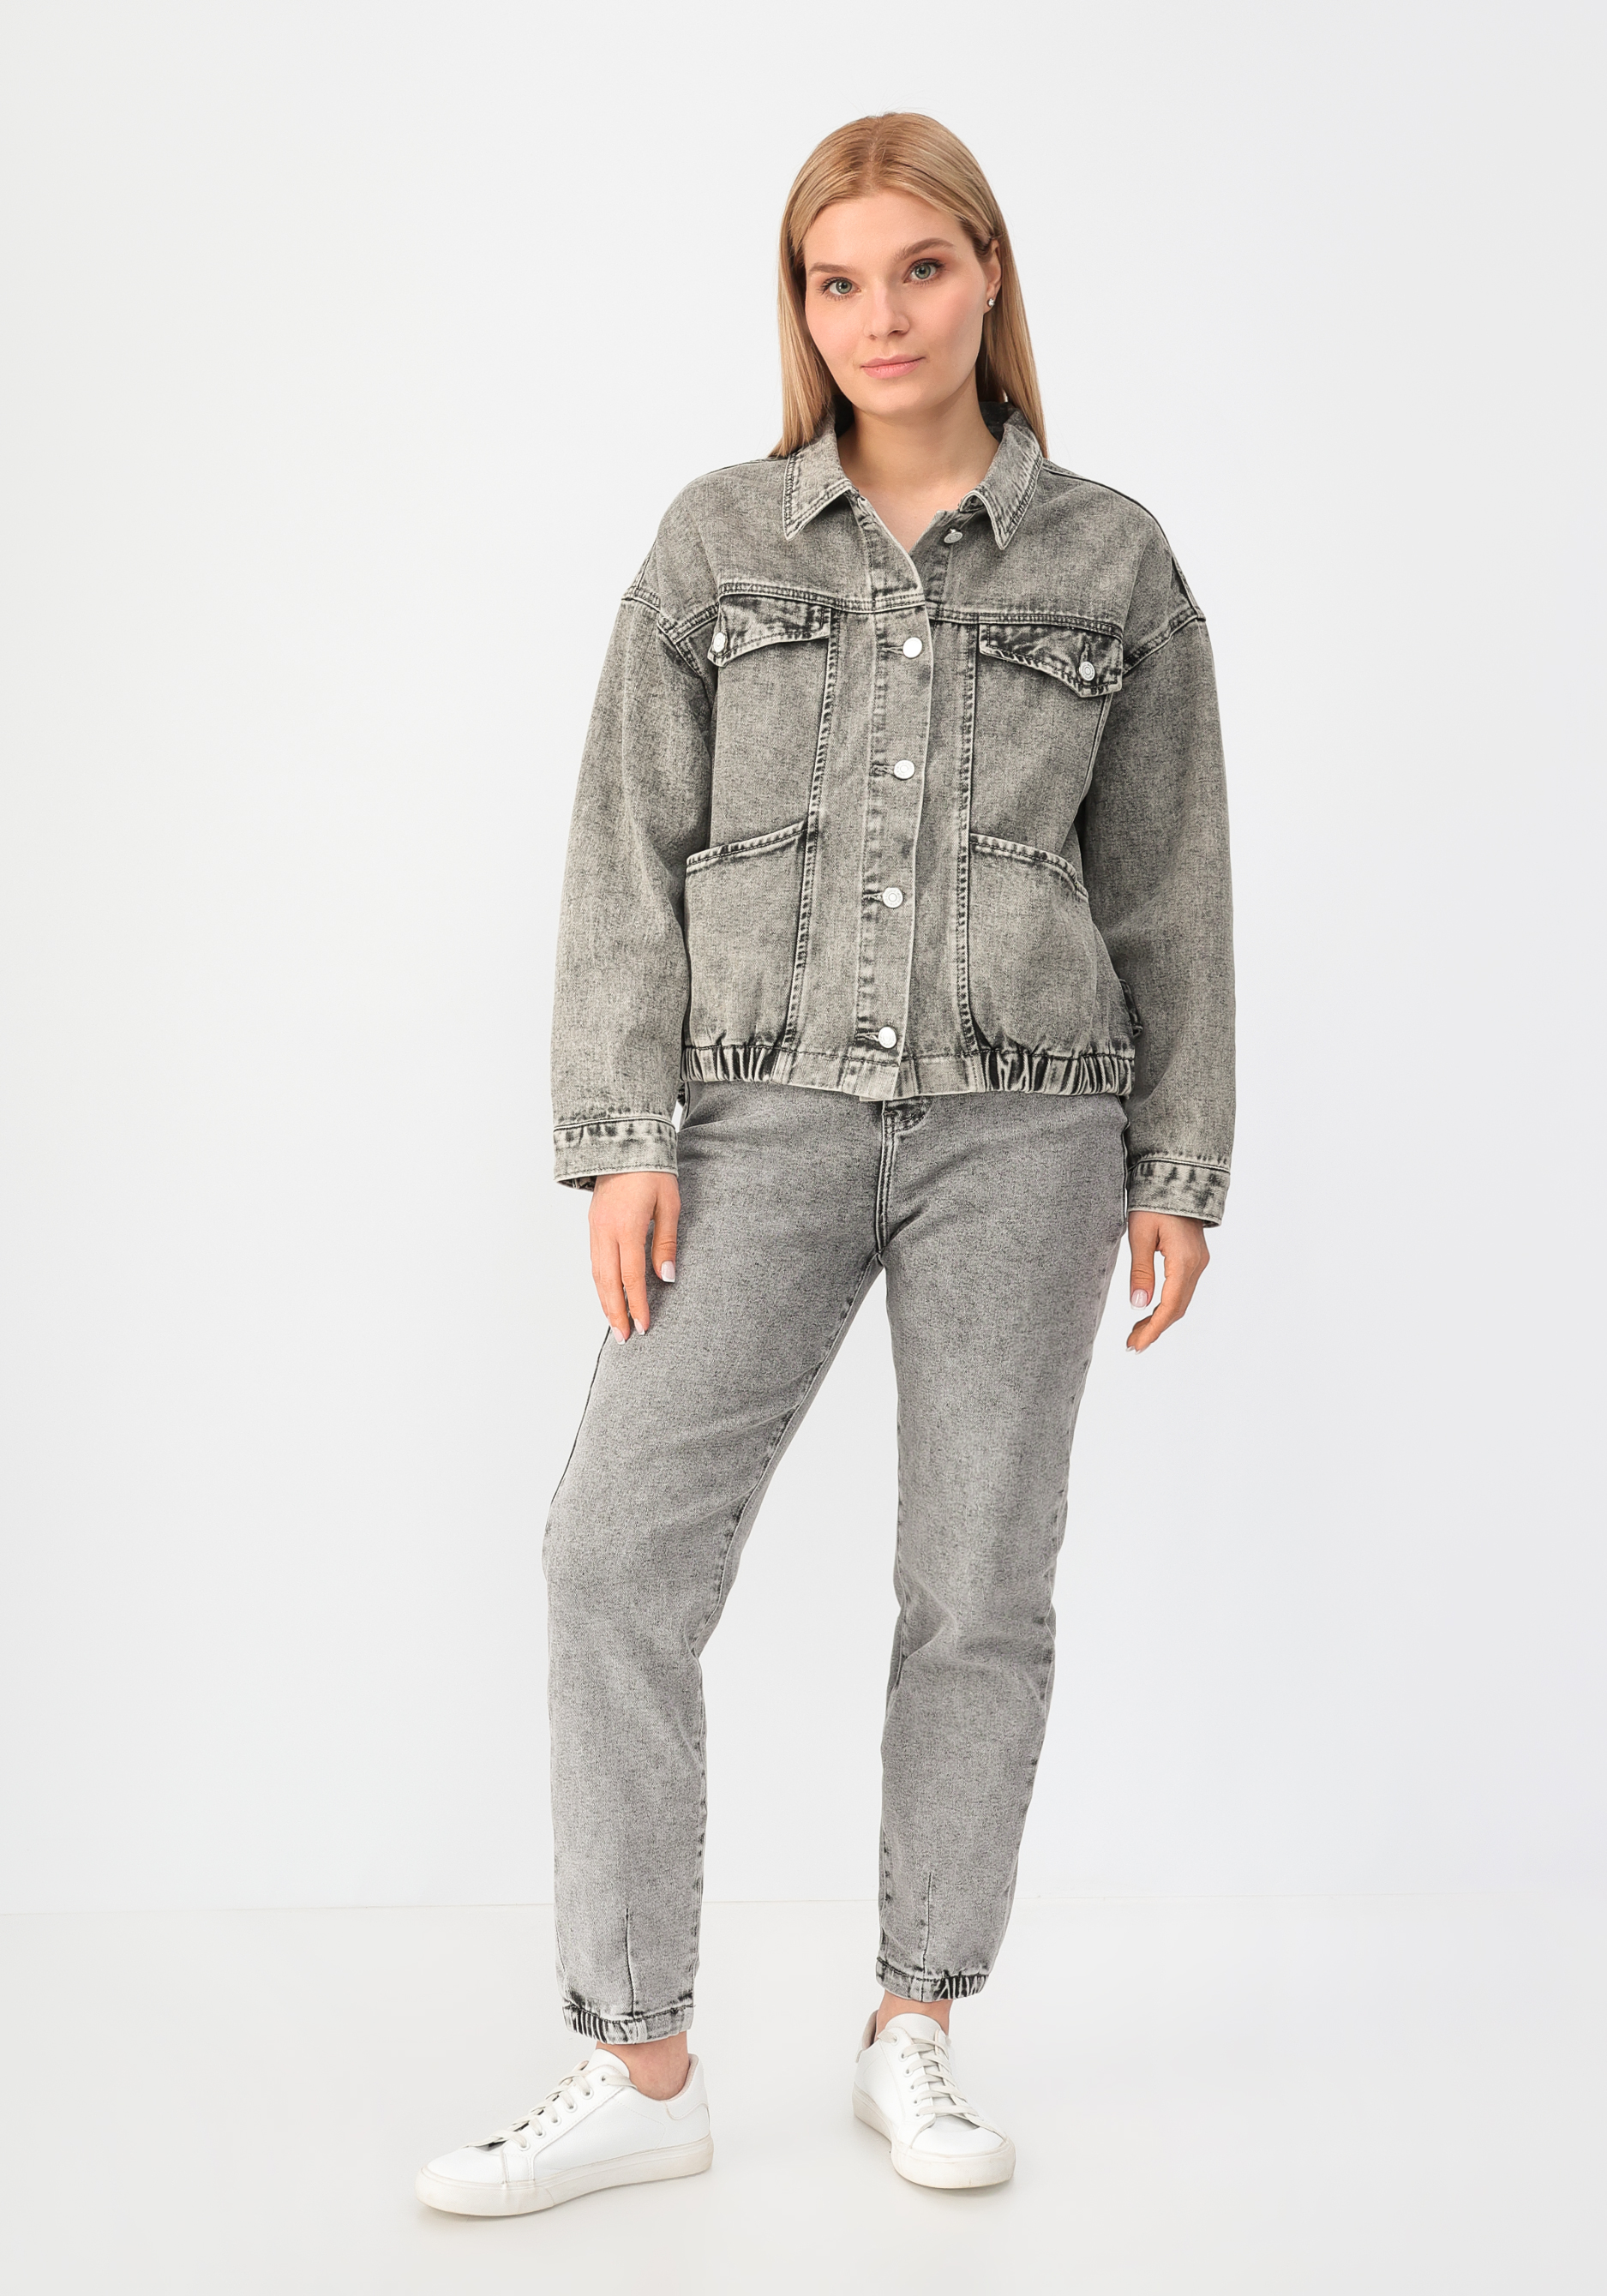 Куртка джинсовая "Милена" No name, размер 48, цвет серый - фото 3